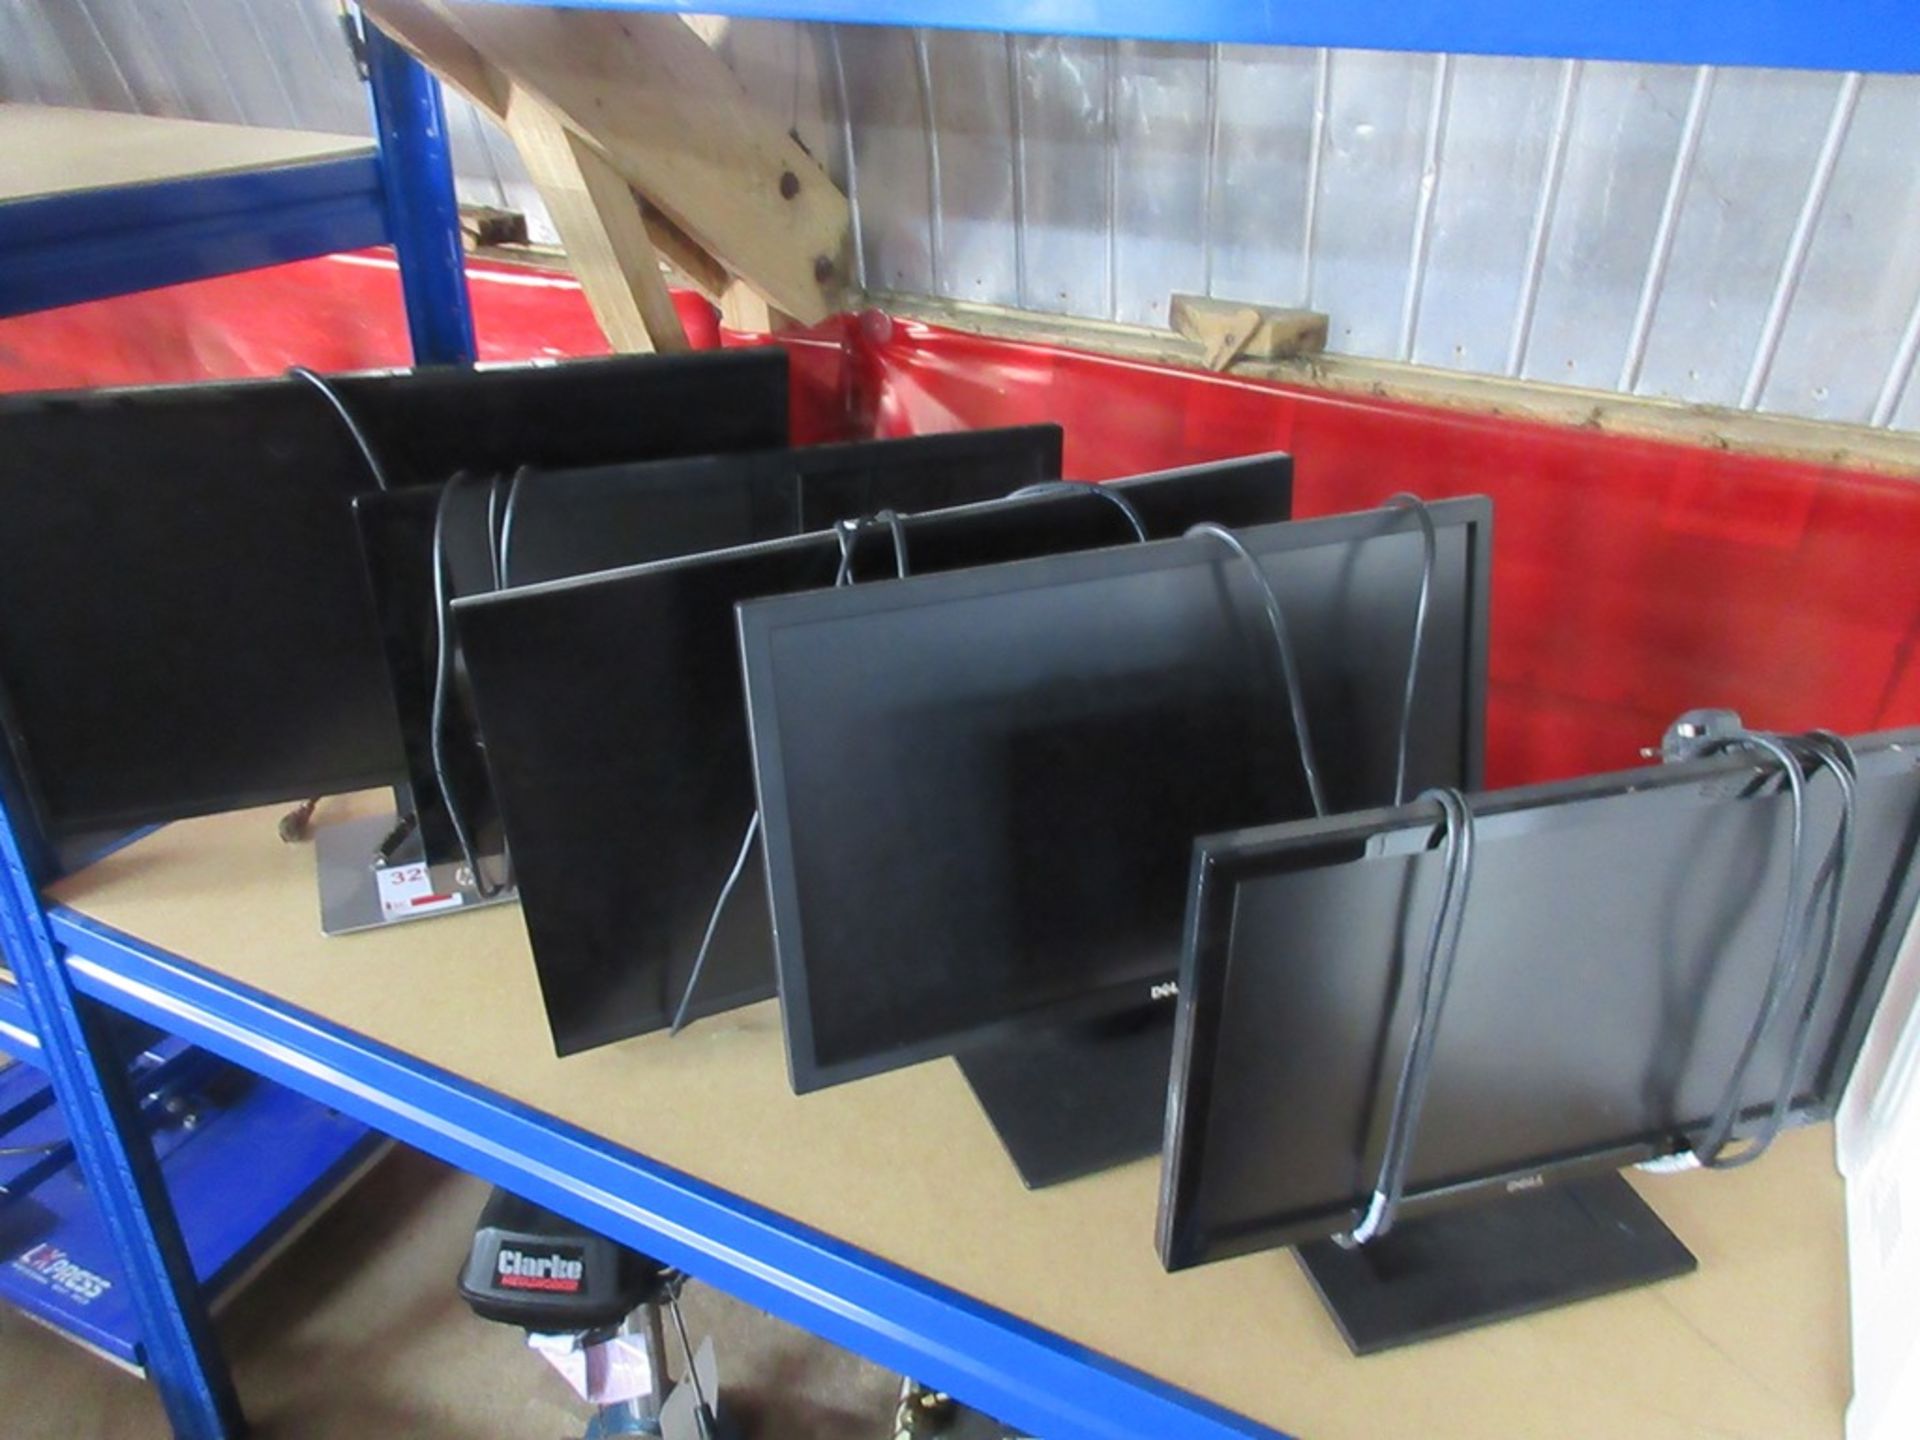 5 x various size flat screen monitors